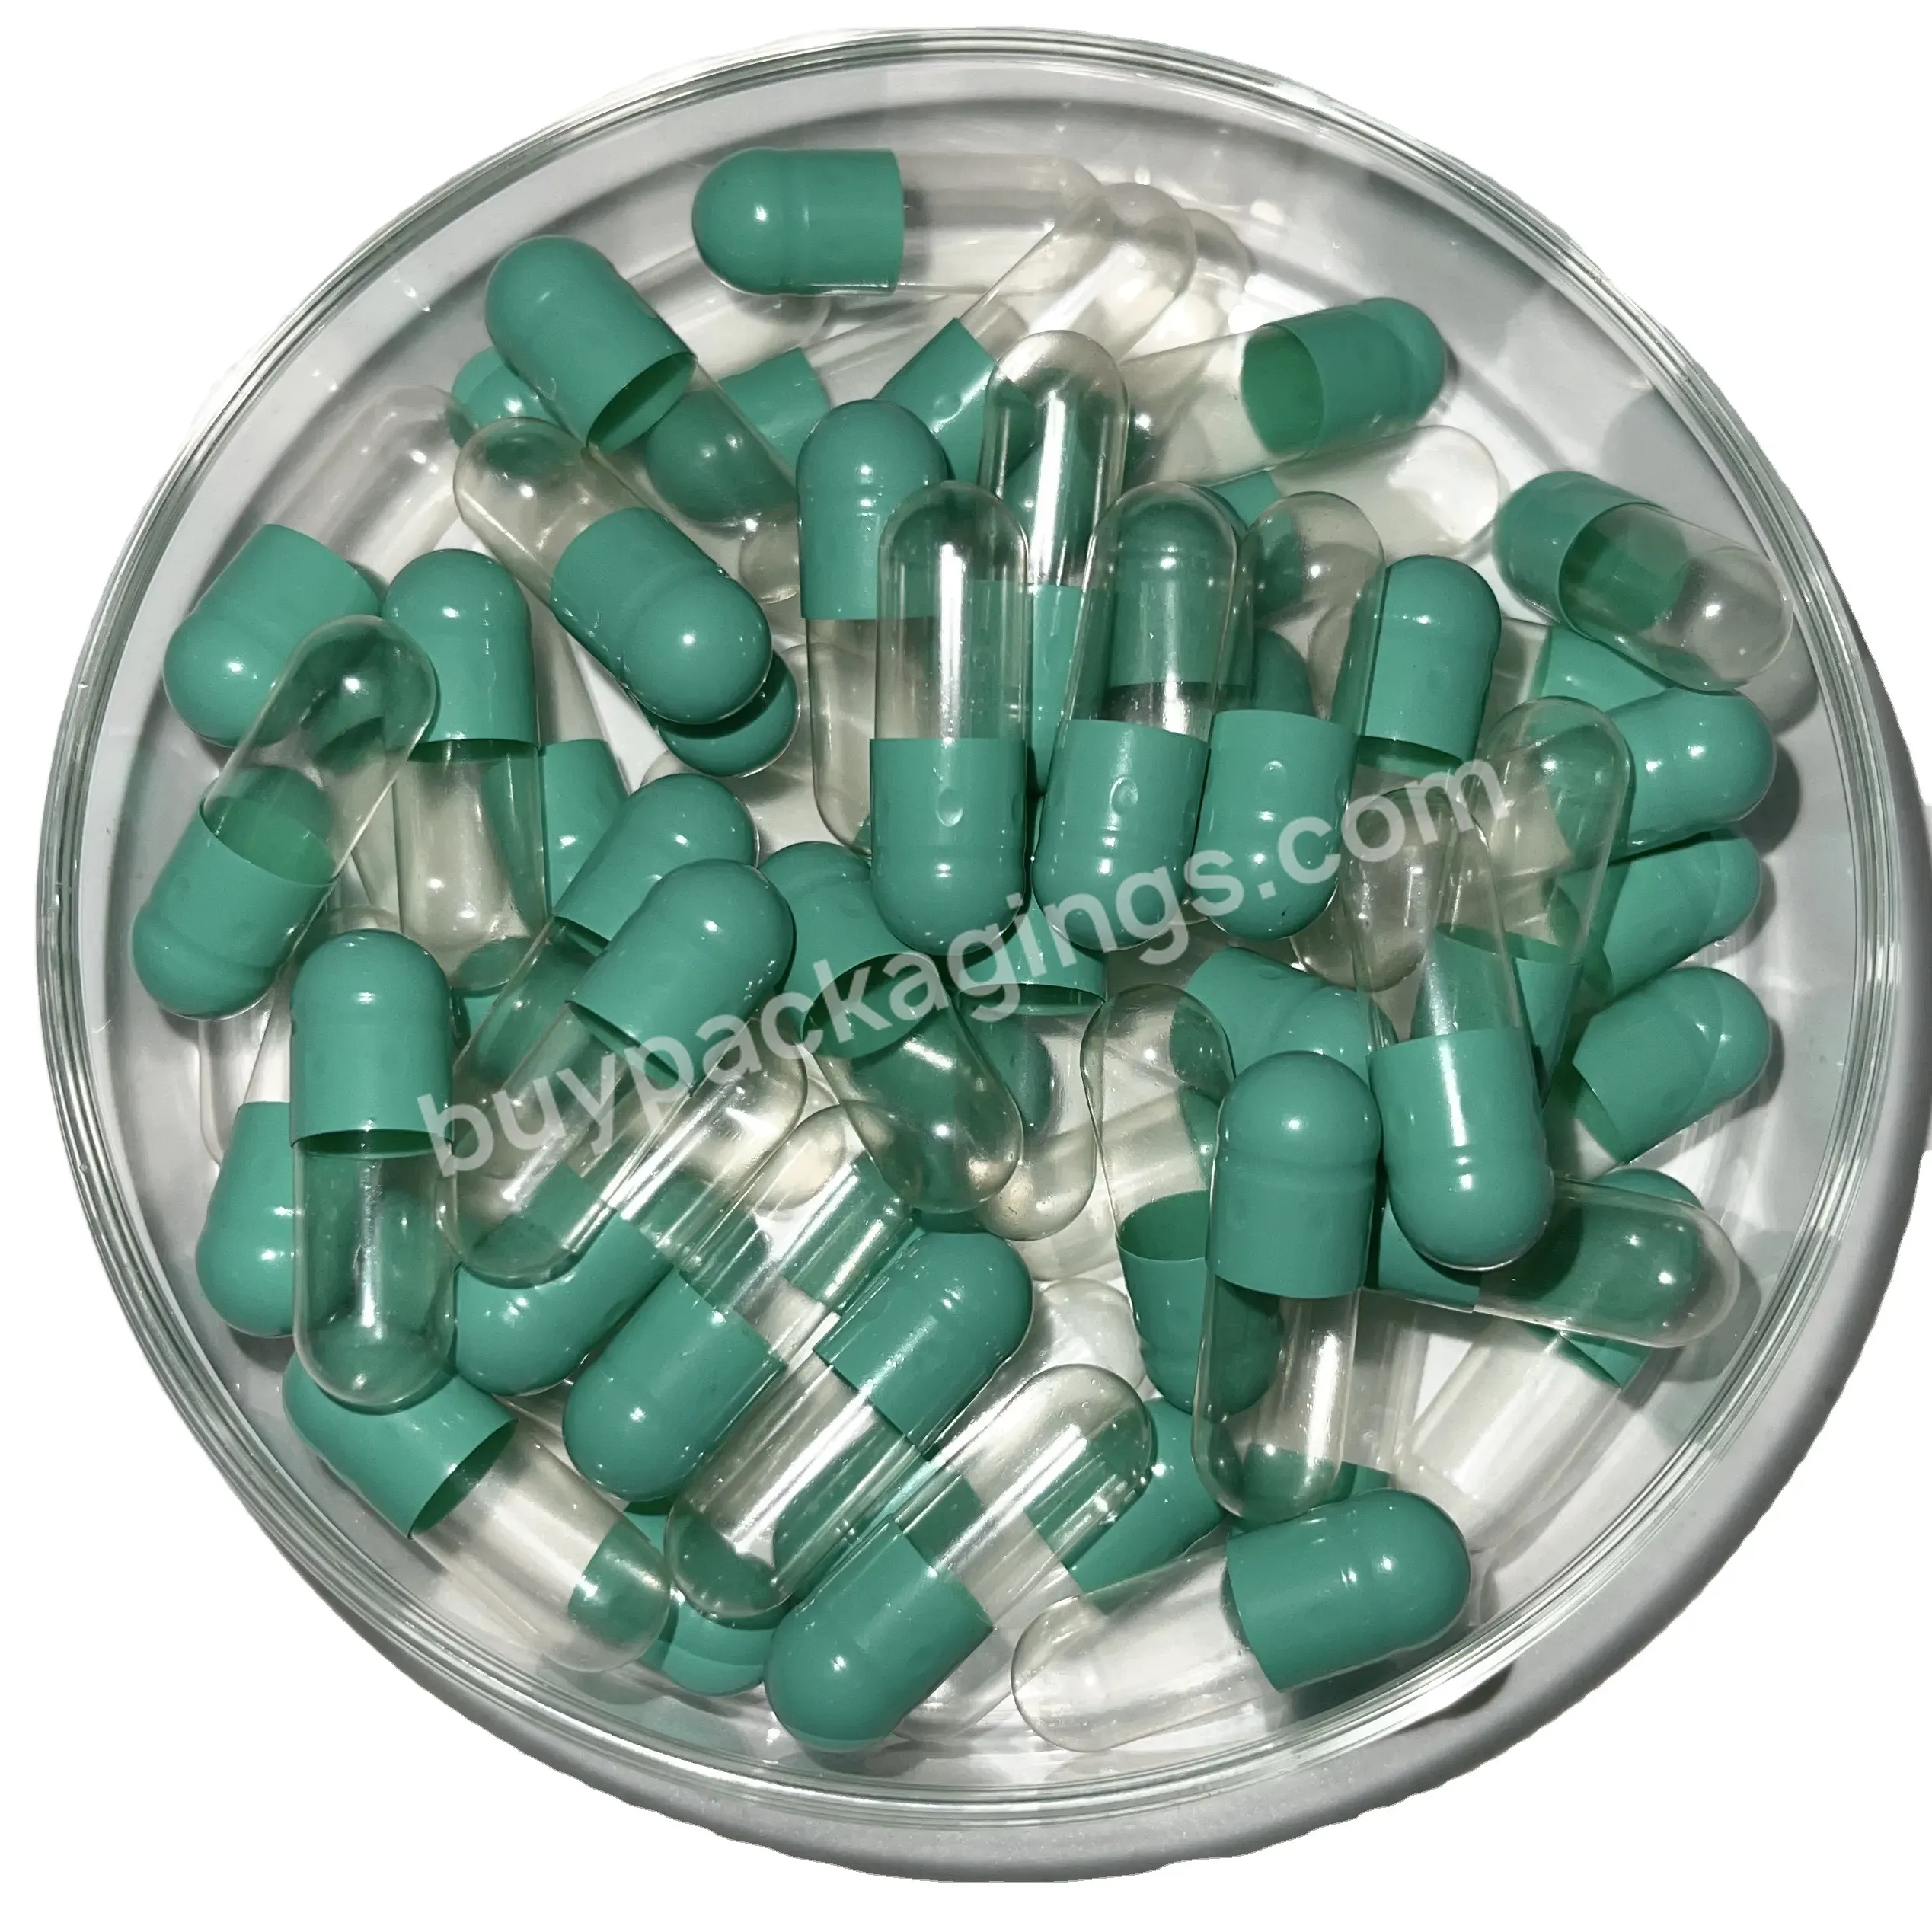 Edible White Hollow Hard Gelatin Capsules Pill Size 0 For Medicine Powder - Buy Gelatin Capsules Pill,White Hollow Hard Capsules,0 Medicine Capsules.